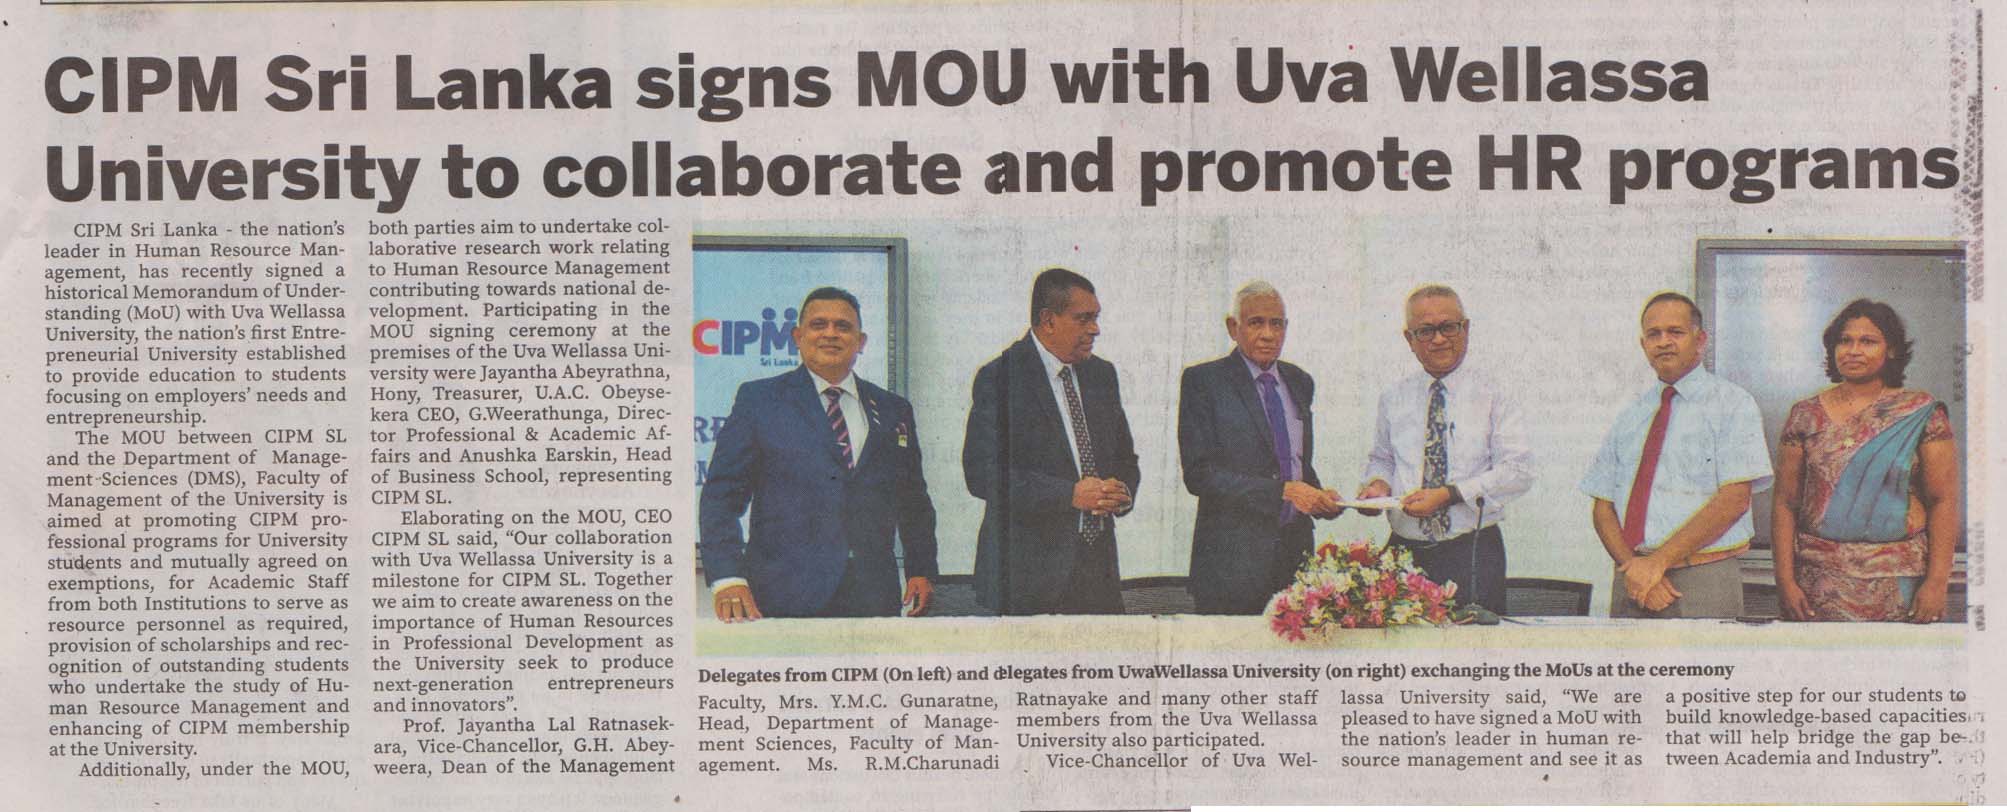 CIPM Sri Lanka signs MOU with Uwa Wellassa University to collaborate and promote HR programmes 